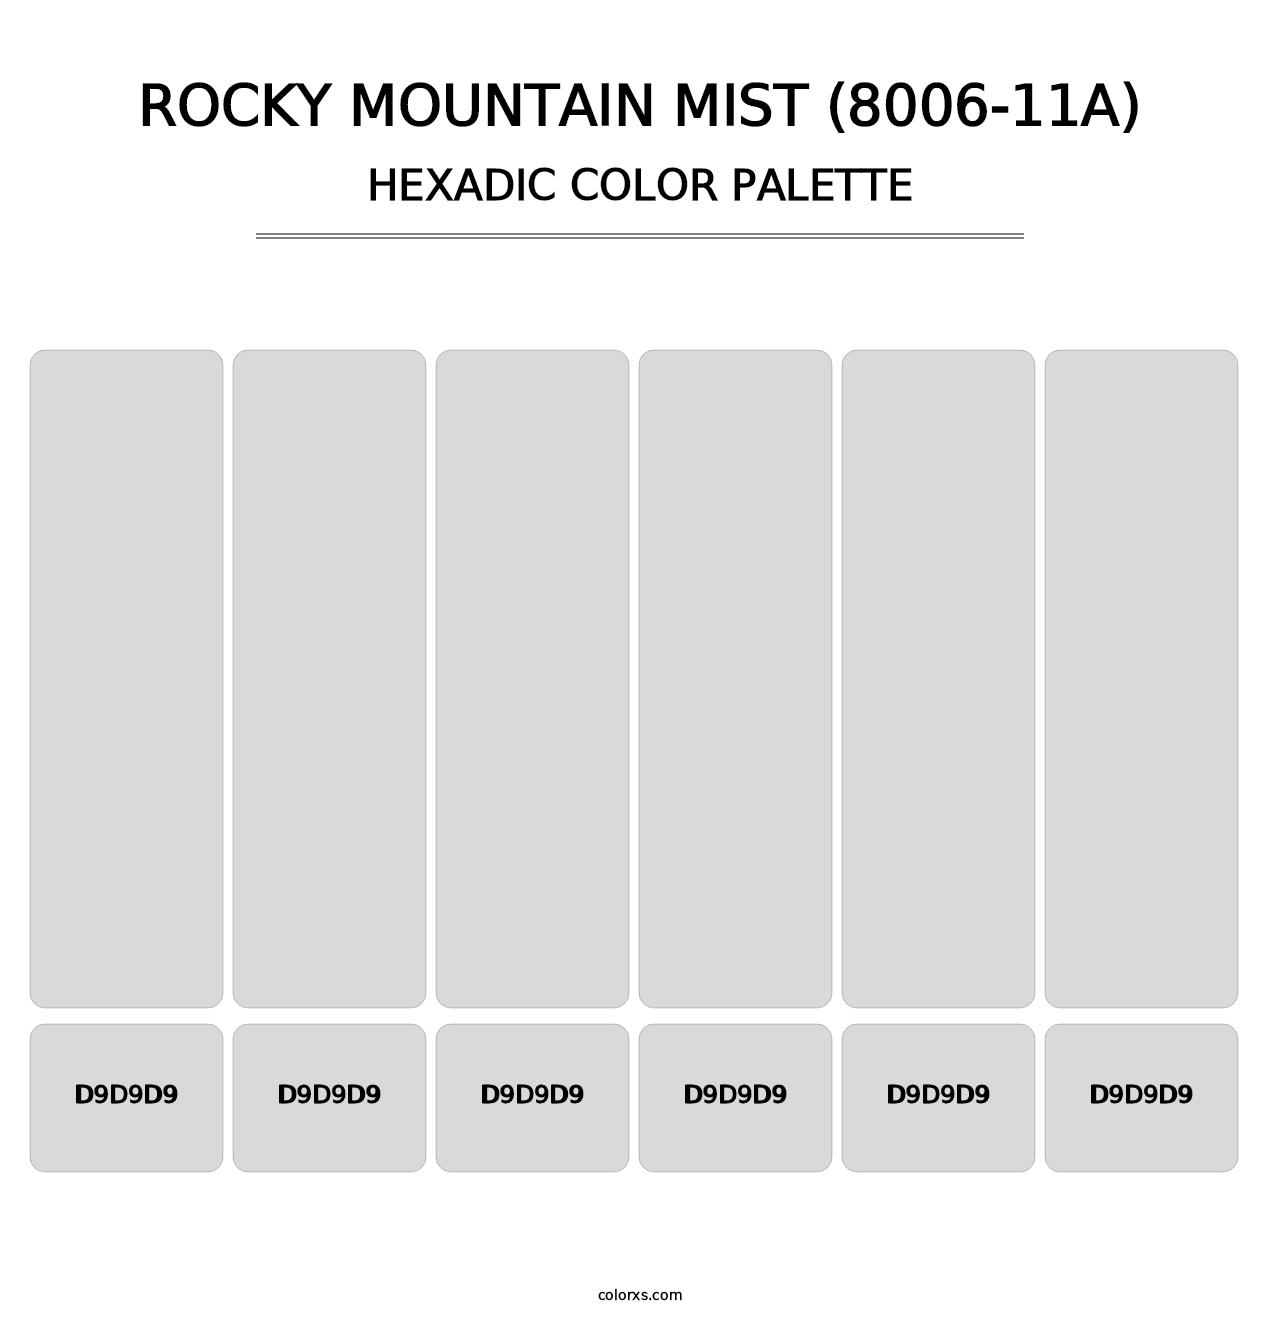 Rocky Mountain Mist (8006-11A) - Hexadic Color Palette